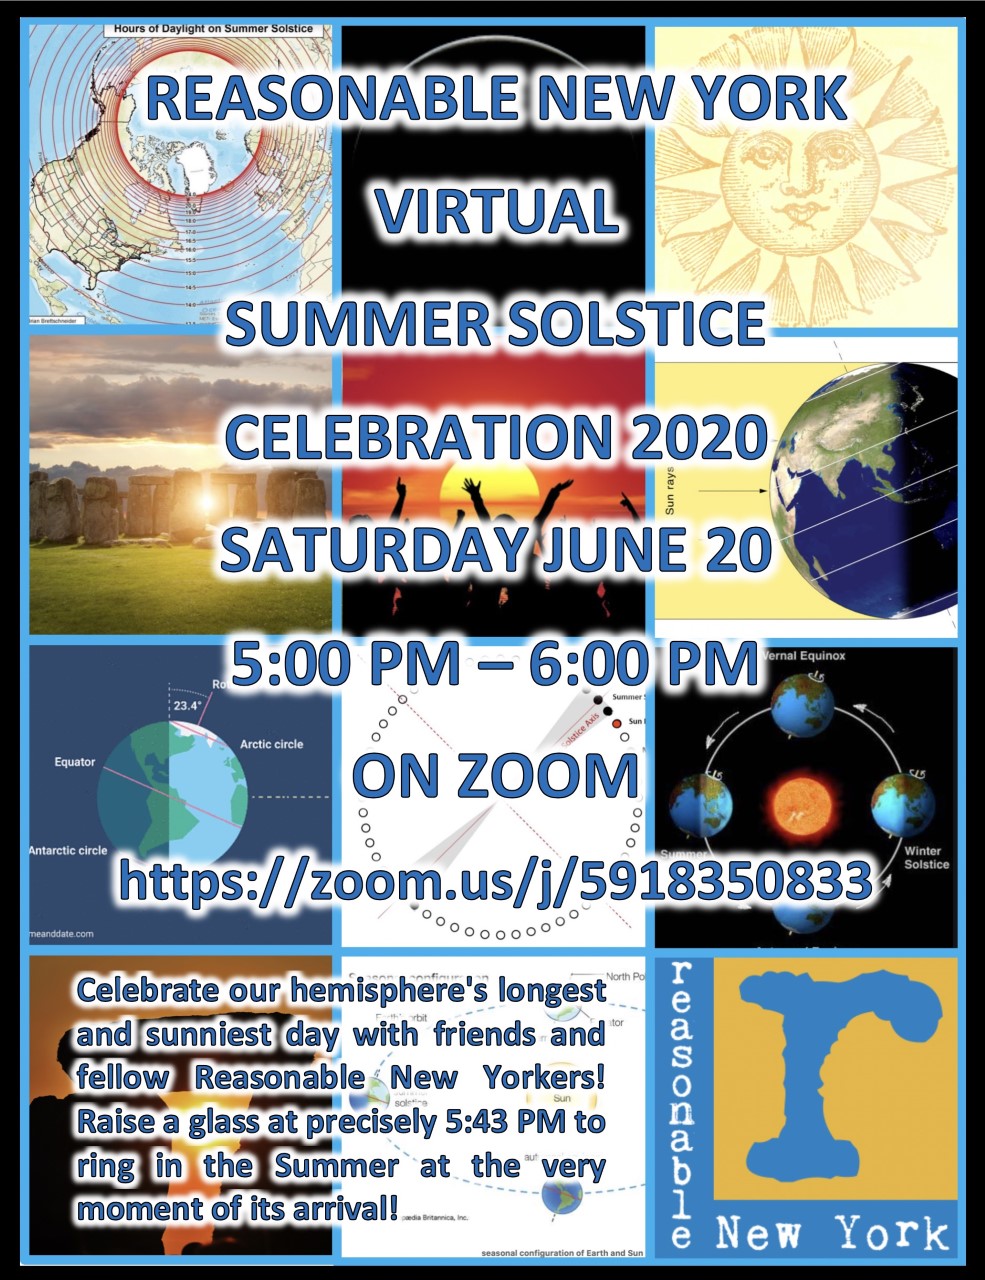 Reasonable New York Virtual Summer Solstice Celebration 2020 Ethical NYC